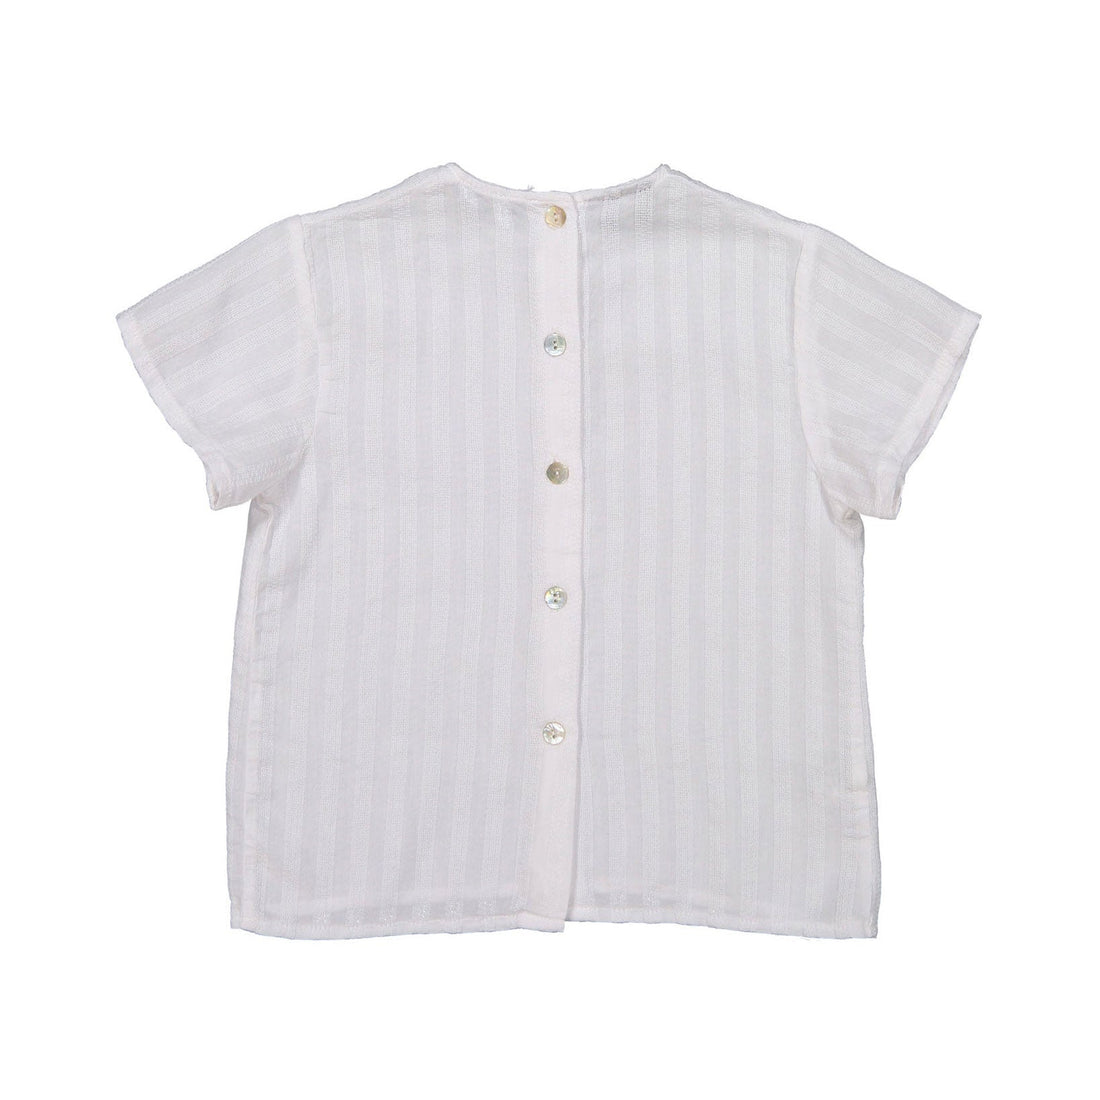 Violeta shirts Violeta White Cotton Nak Baby Shirt